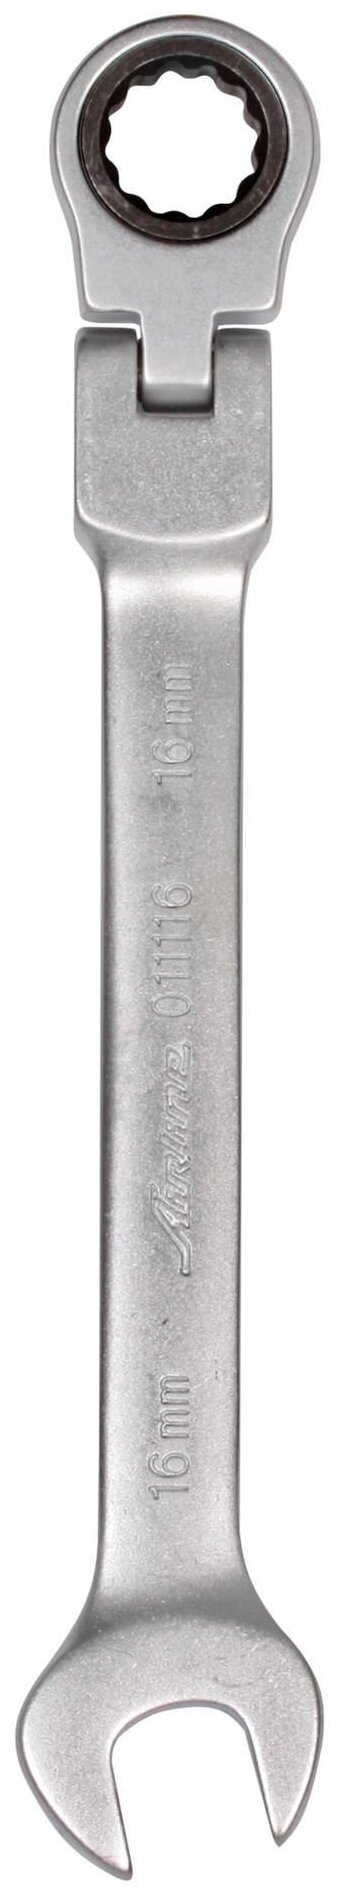 Ключ накидной AIRLINE AT-RFS-09, 16 мм